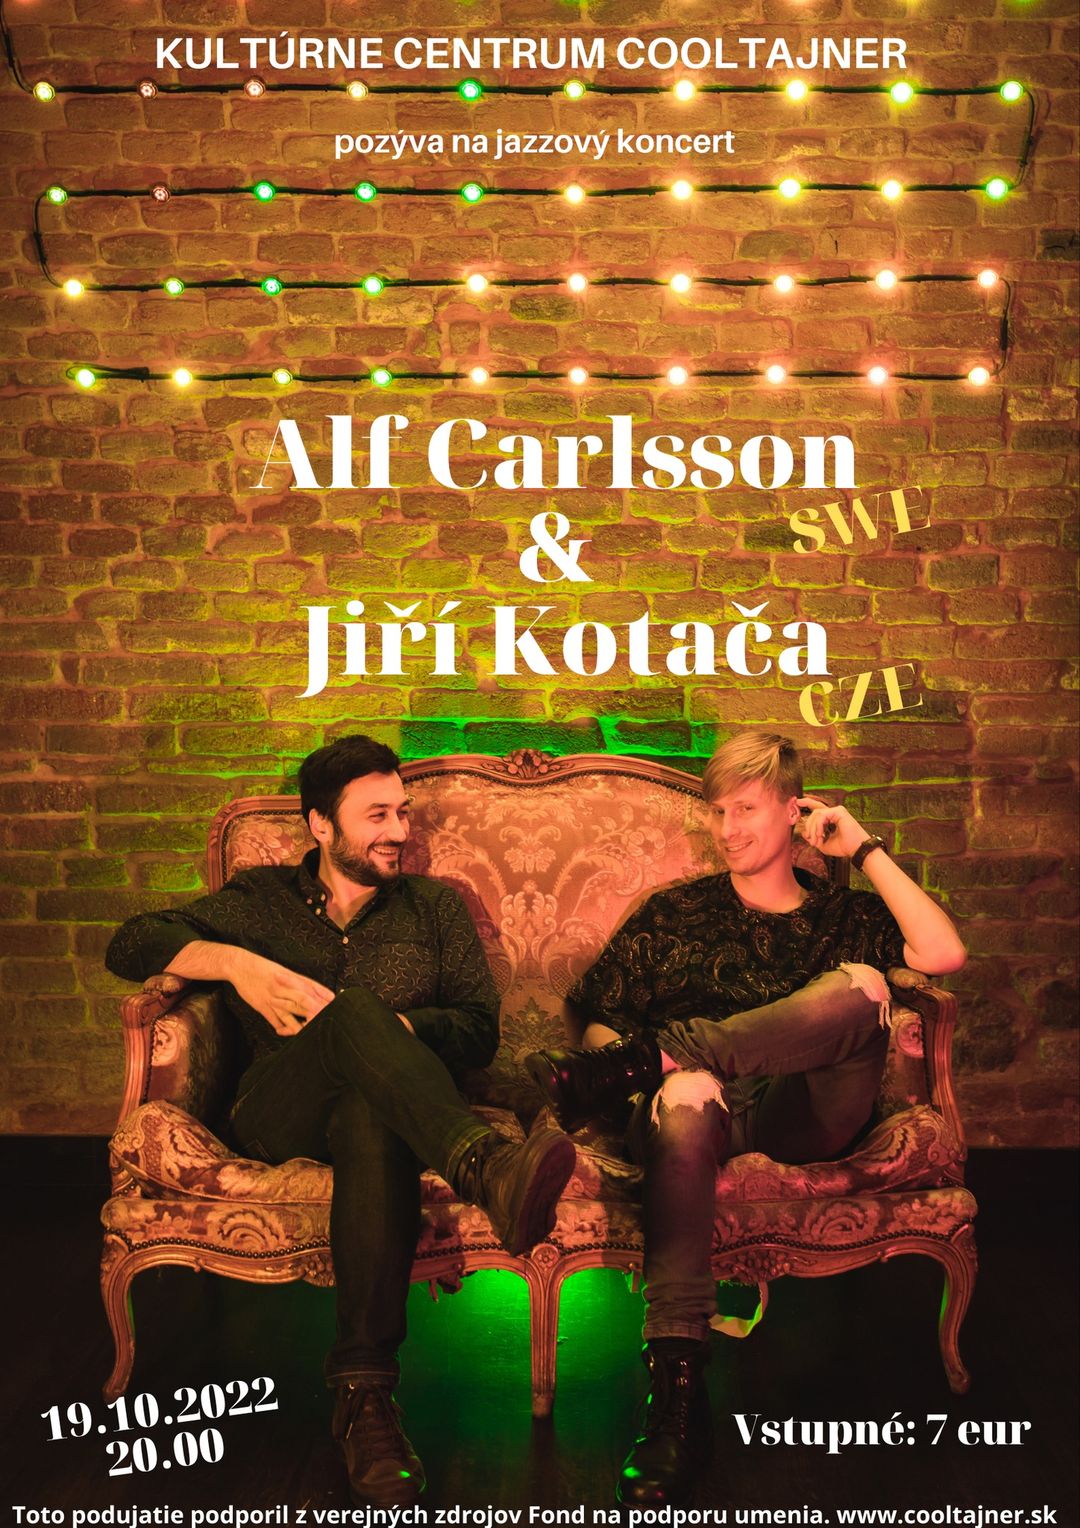 Alf Carlsson (SWE) & Jiří Kotača (CZE)| jazzový koncert v KC Cooltajner Koridor